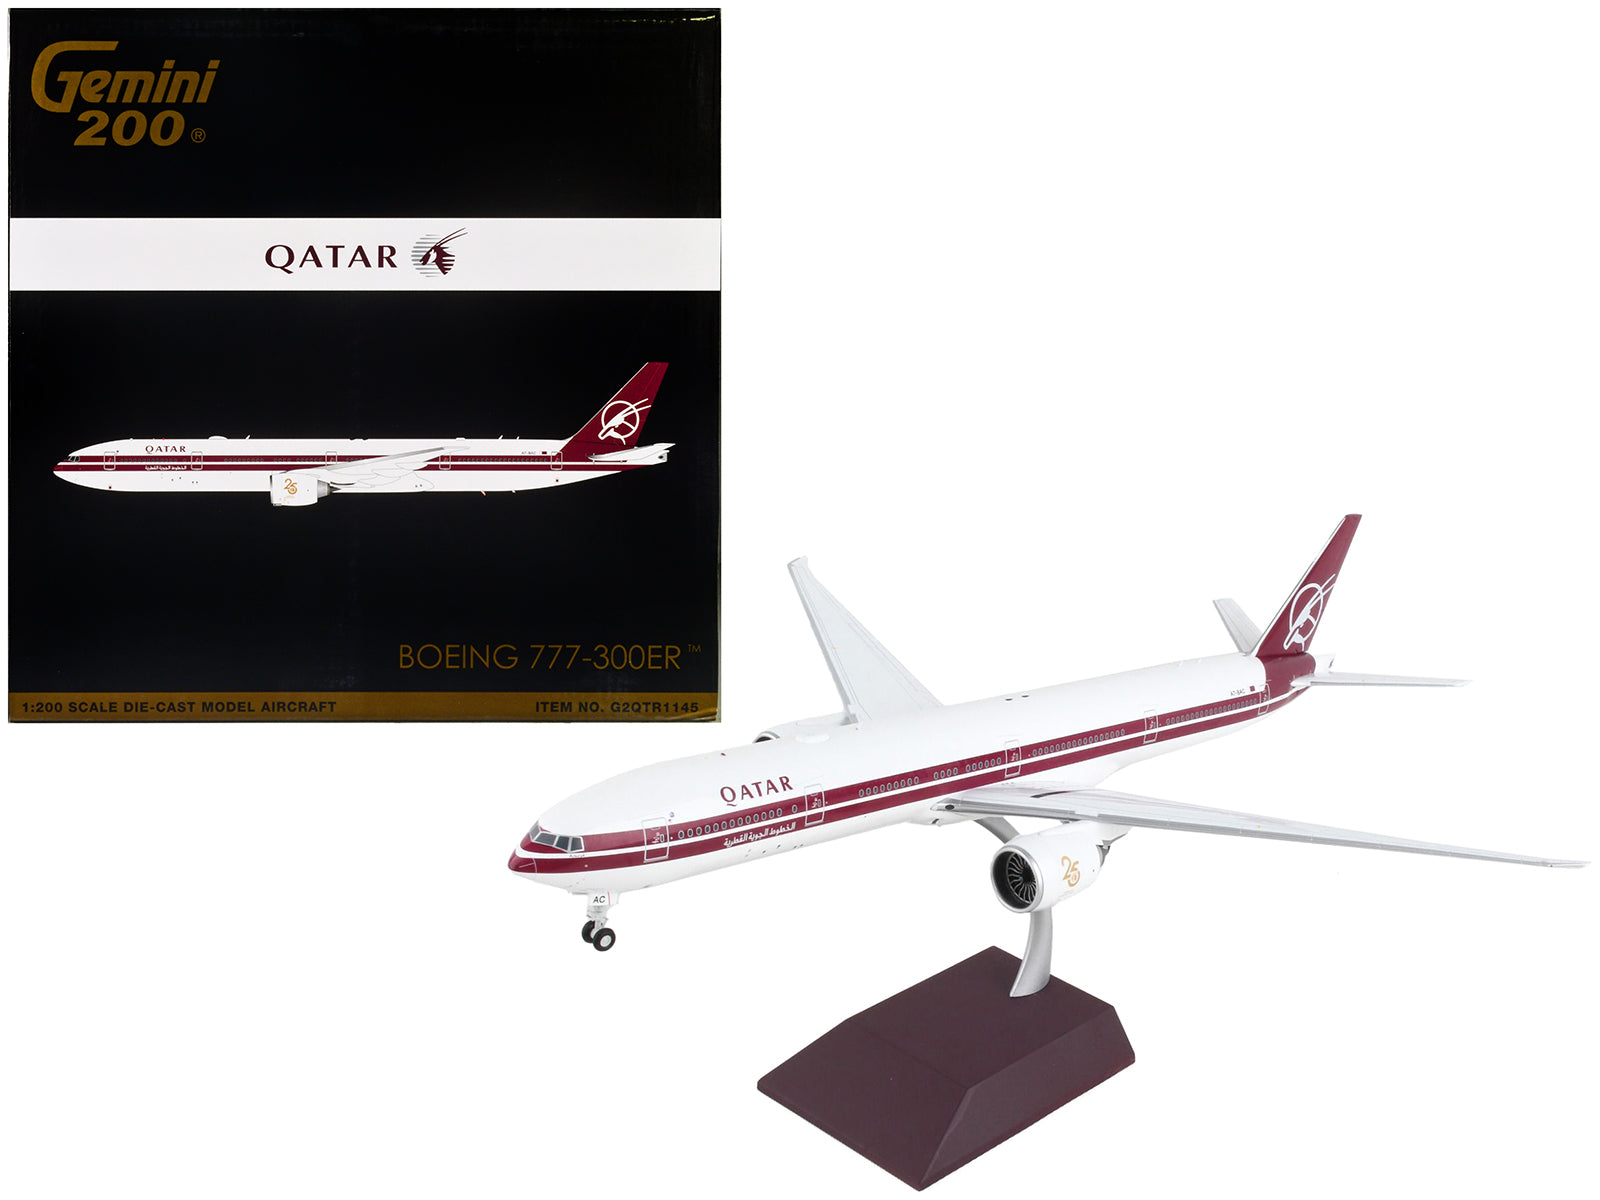 Boeing 777-300ER Commercial Aircraft "Qatar Airways" White with Dark Red Stripes "Gemini 200" Series 1/200 Diecast Model Airplane by GeminiJets